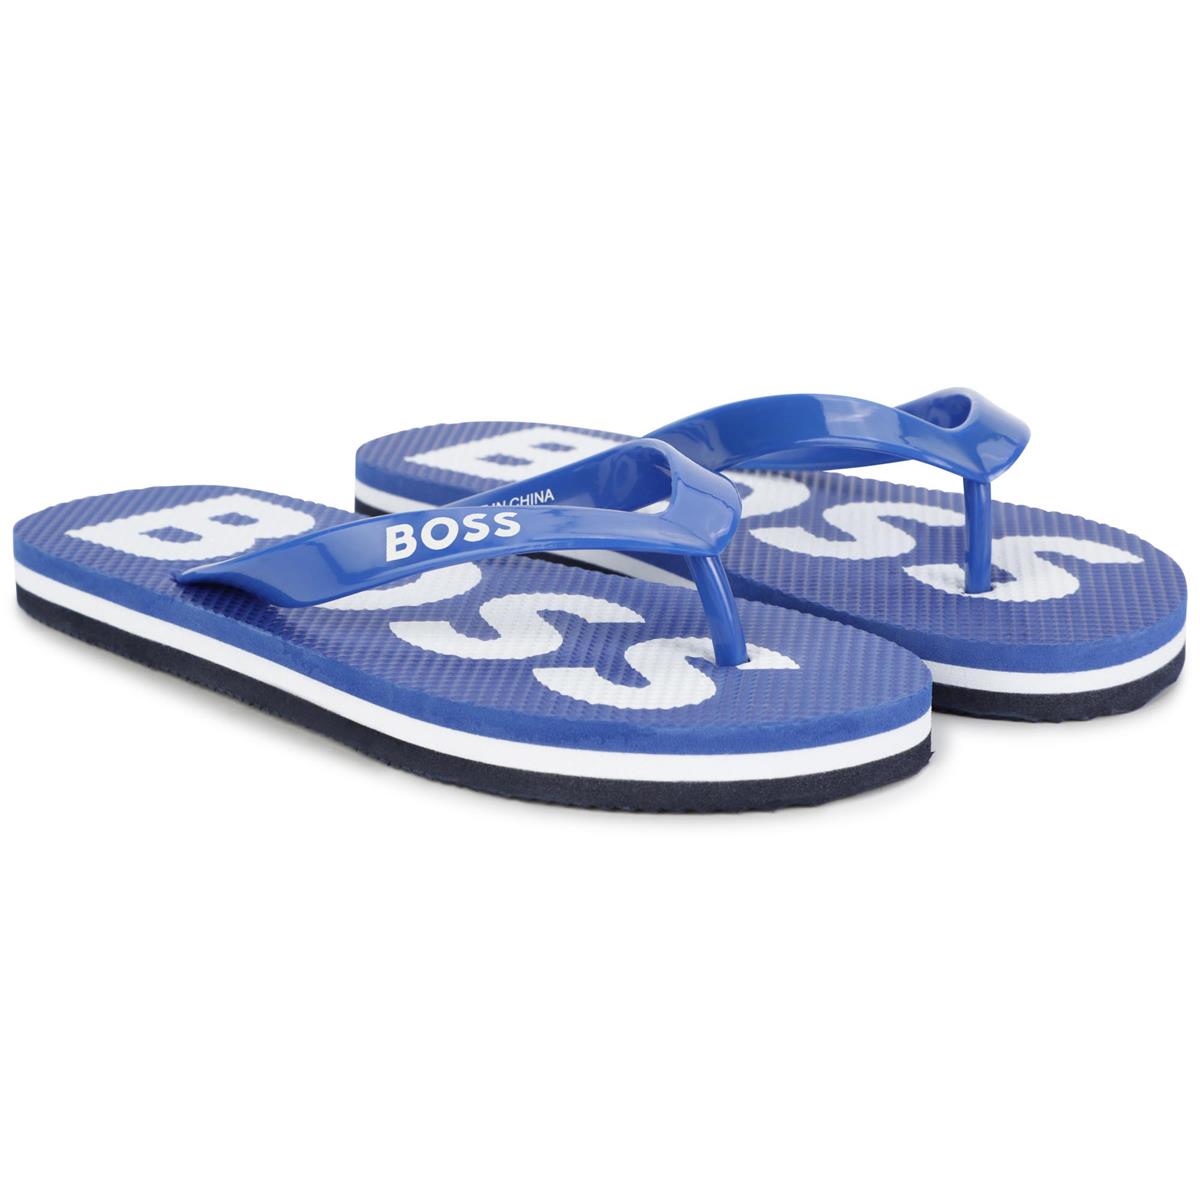 Boys Blue Sandals